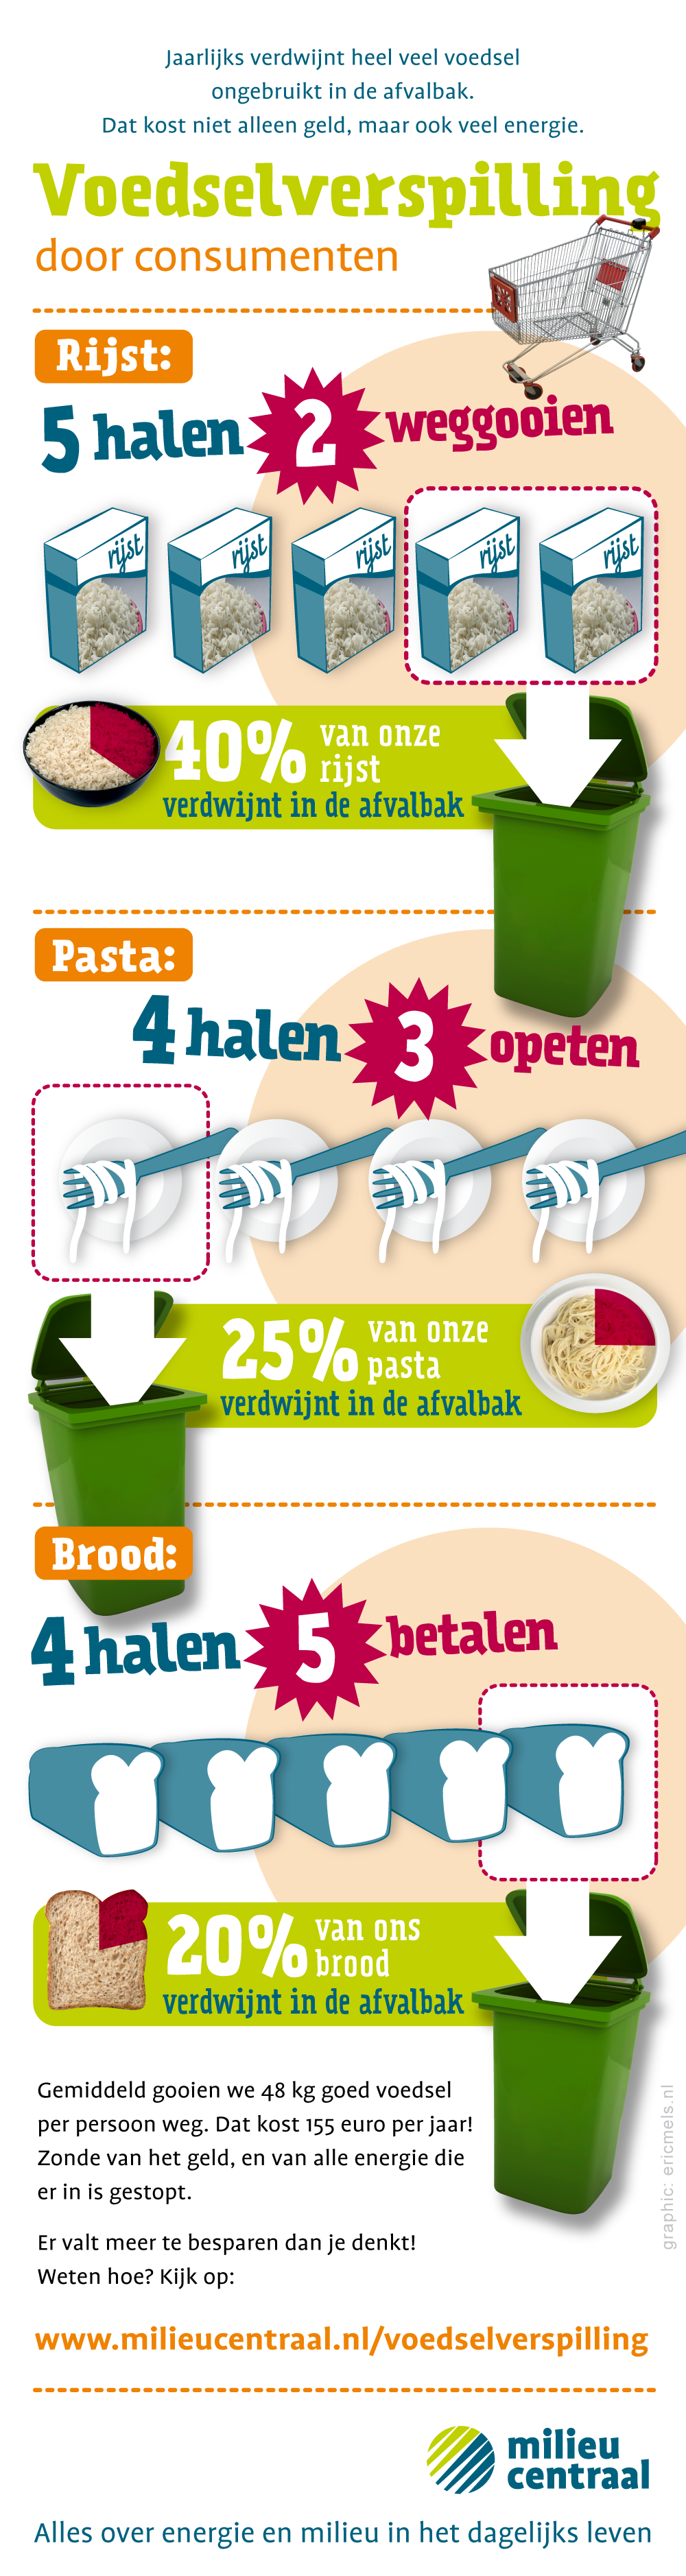 voedselverspilling infographic milieu centraal